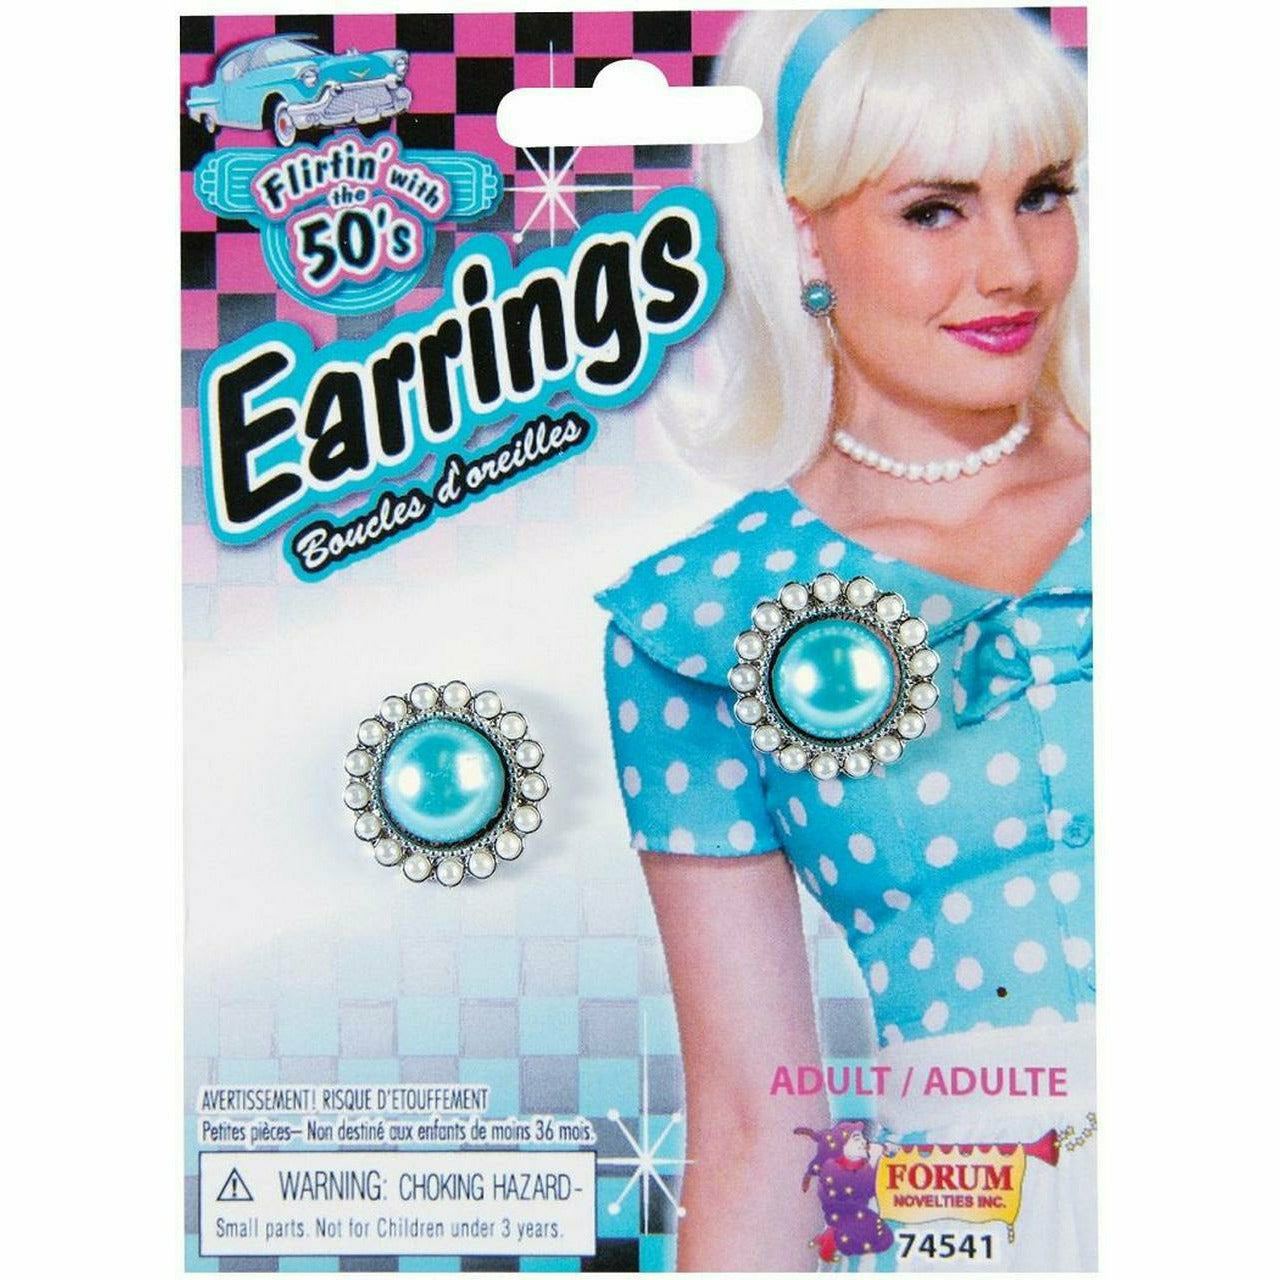 FORUM NOVELTIES INC. COSTUMES: ACCESSORIES Flirty 50's Round Earrings - Teal